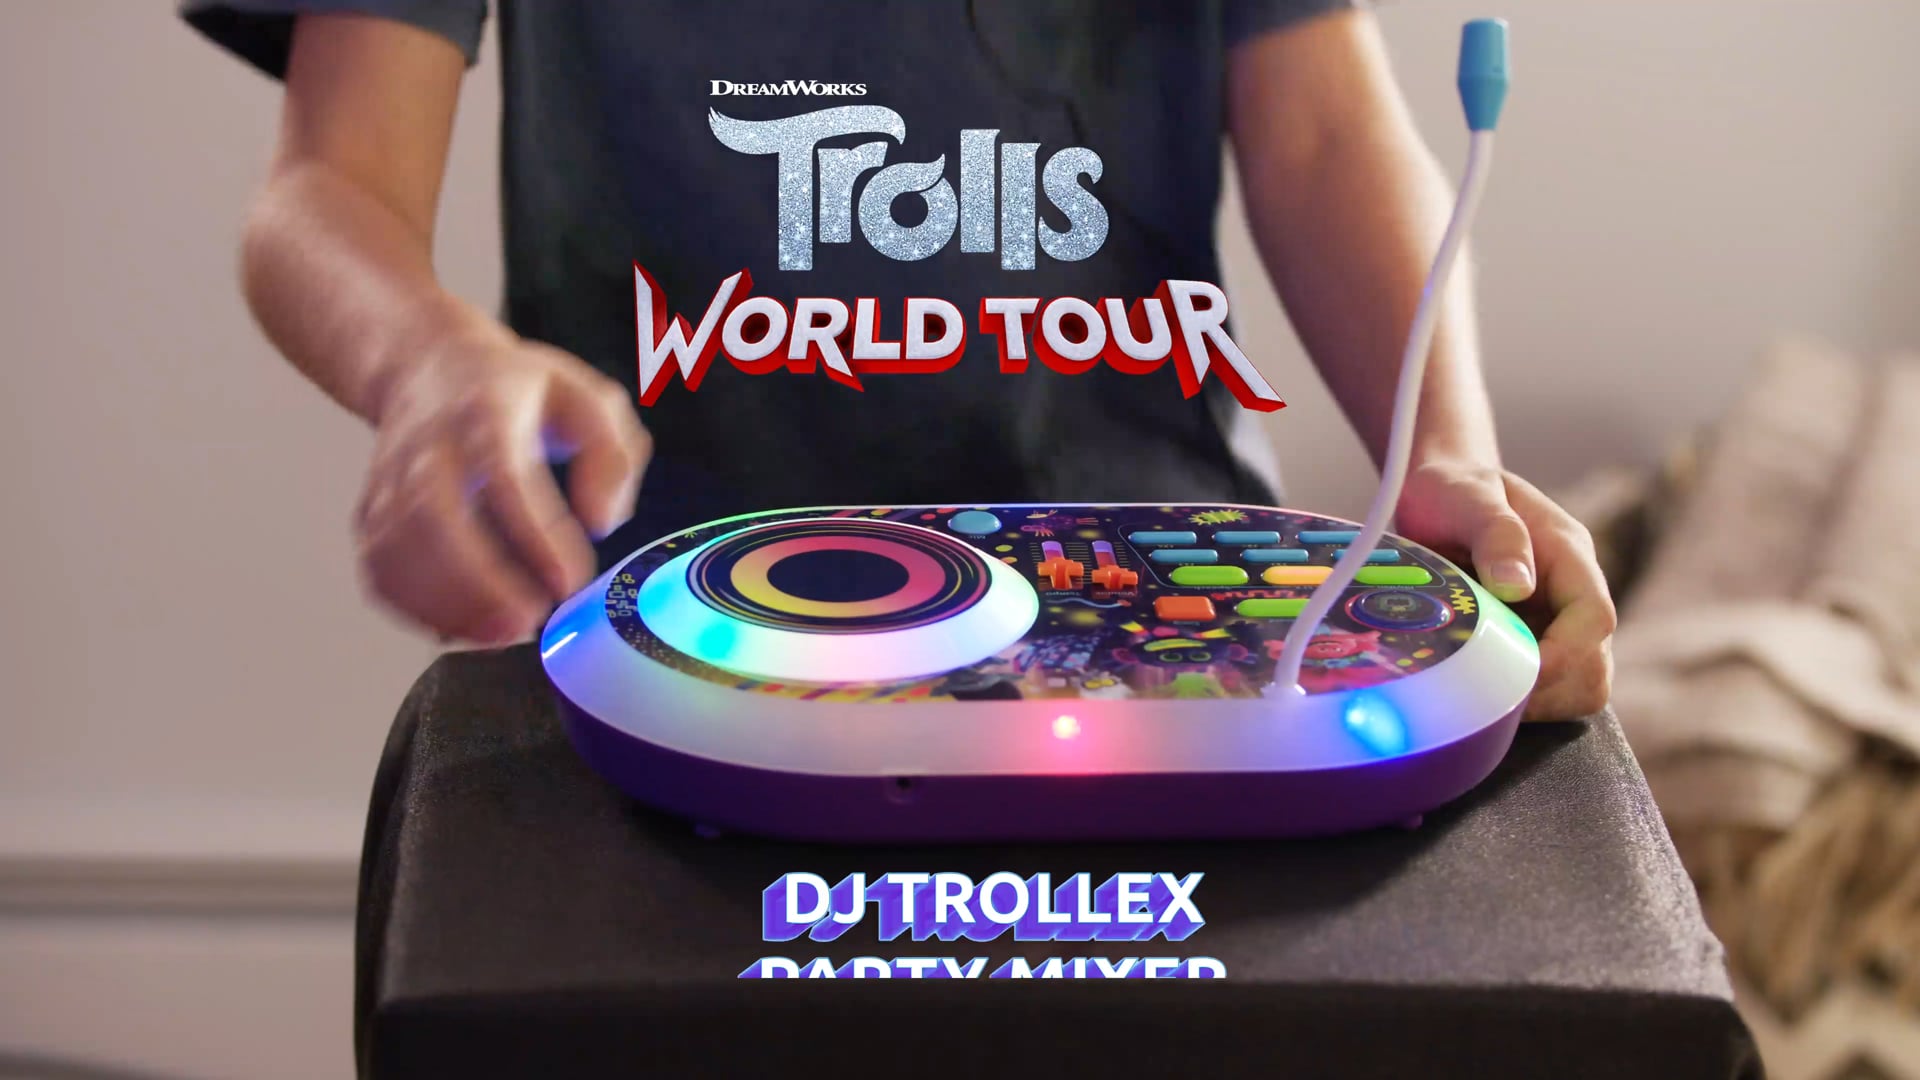 Dreamworks' DJ Trollex Party Mixer